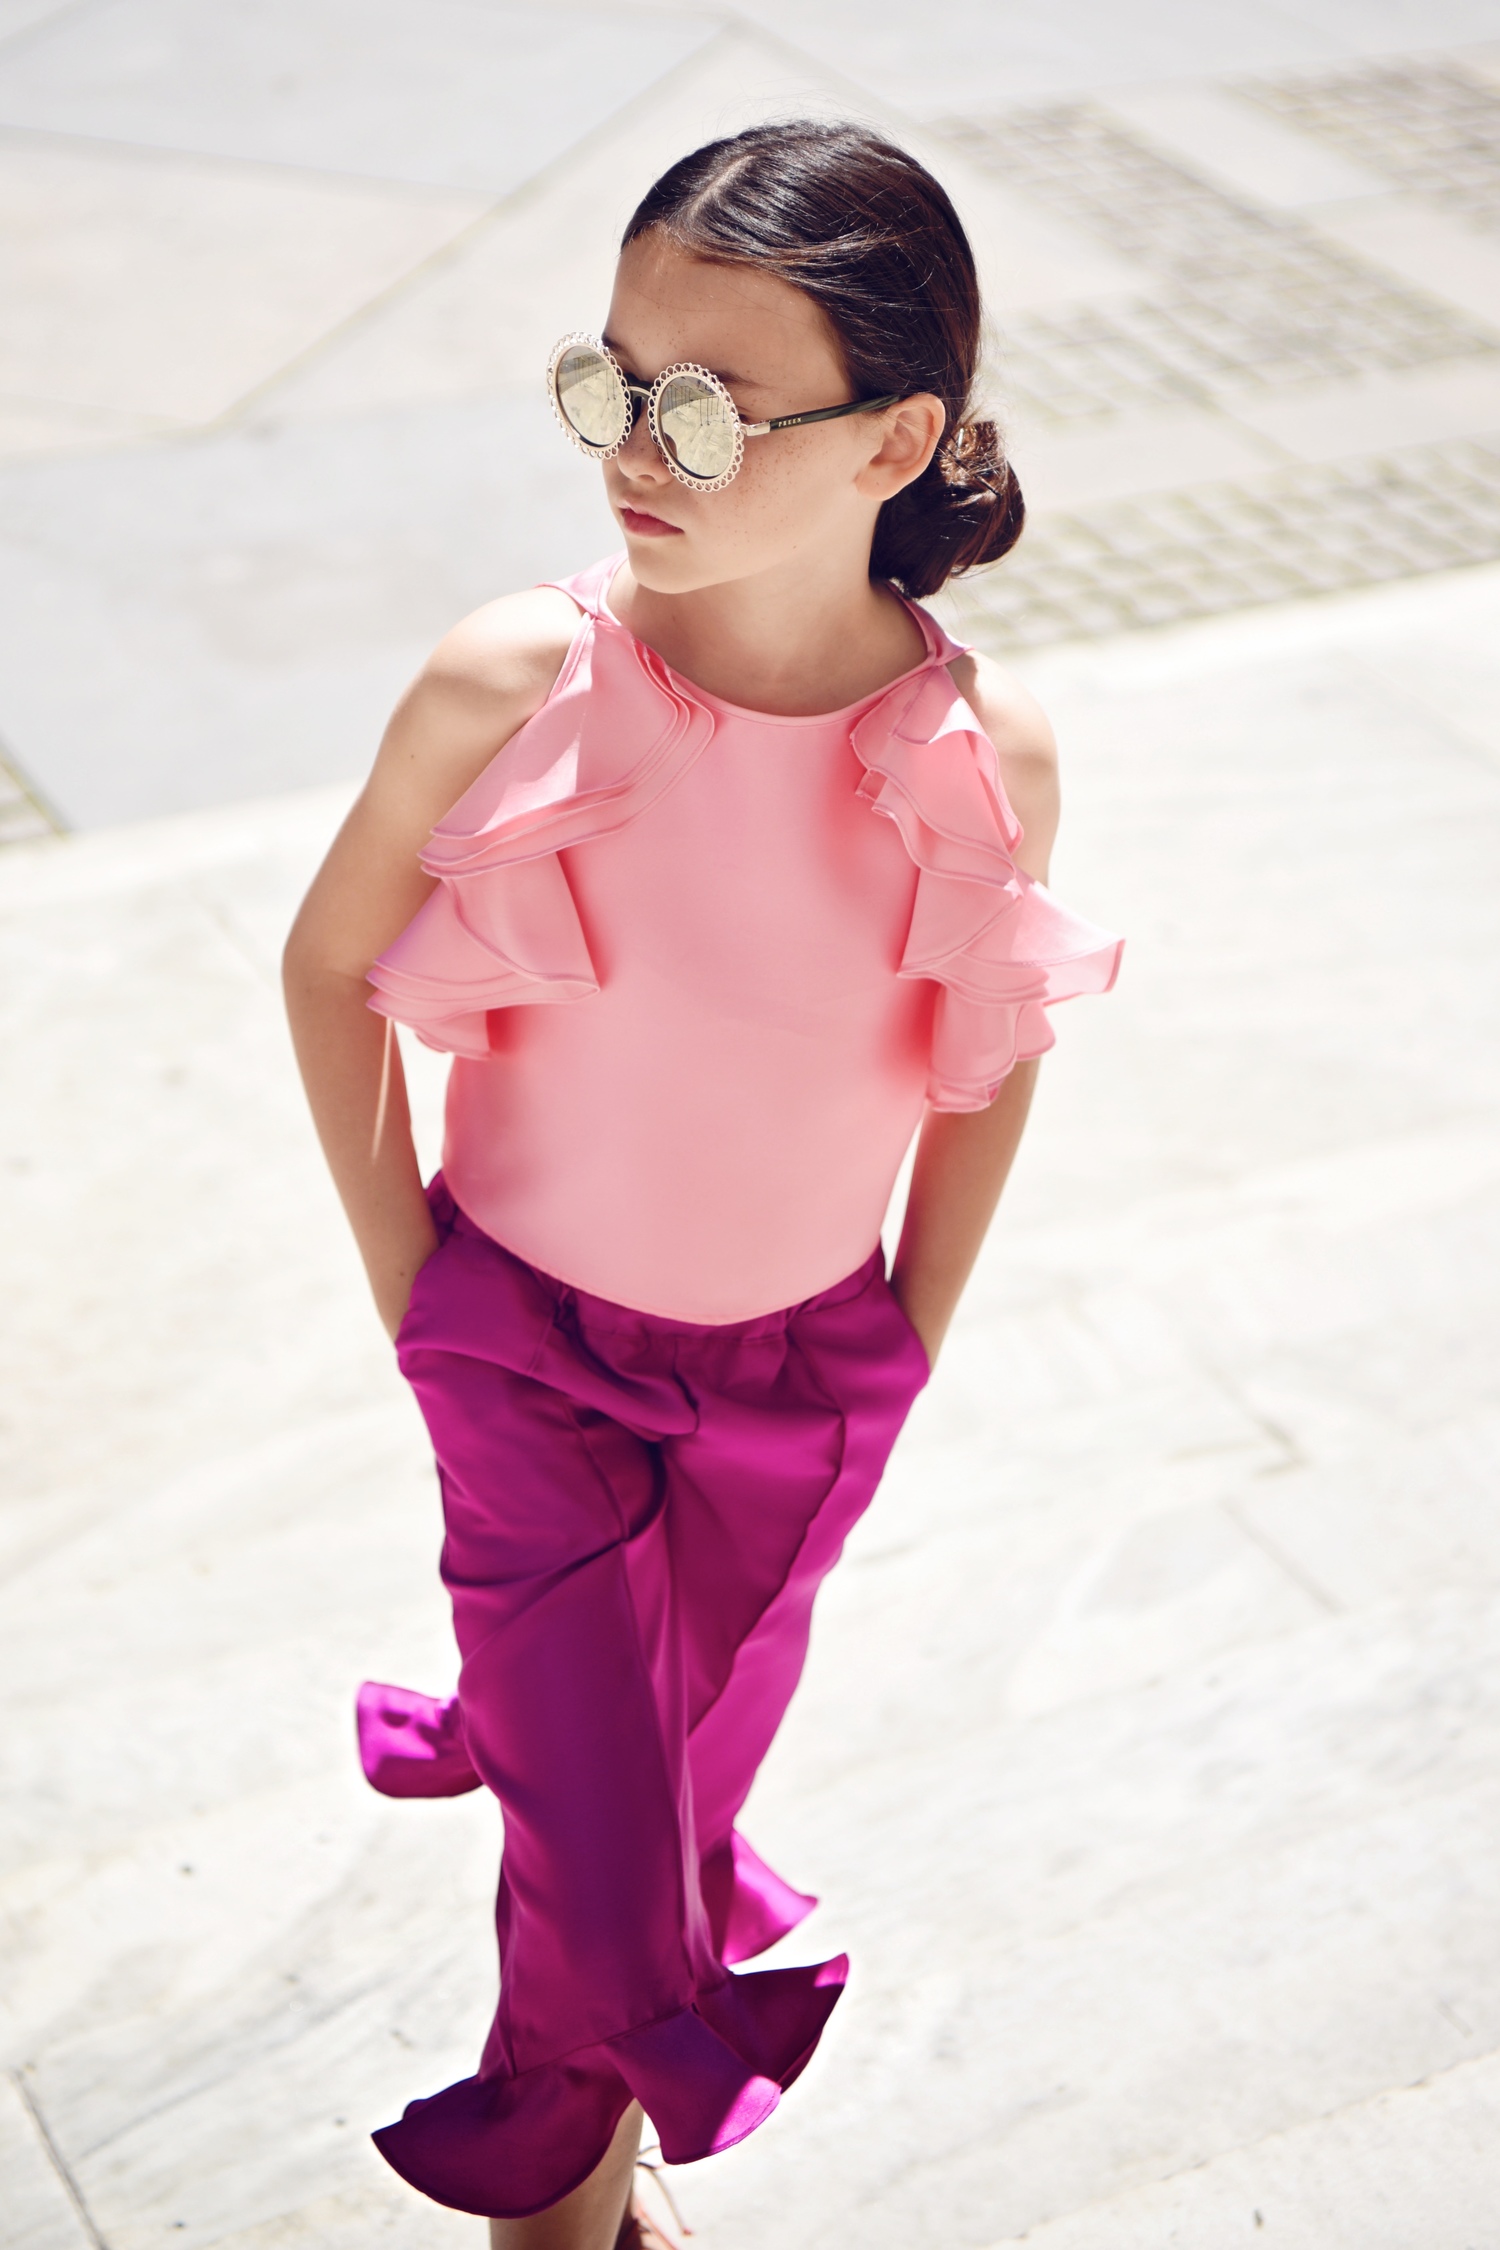 Enfant+Street+Style+by+Gina+Kim+Photography-9.jpeg